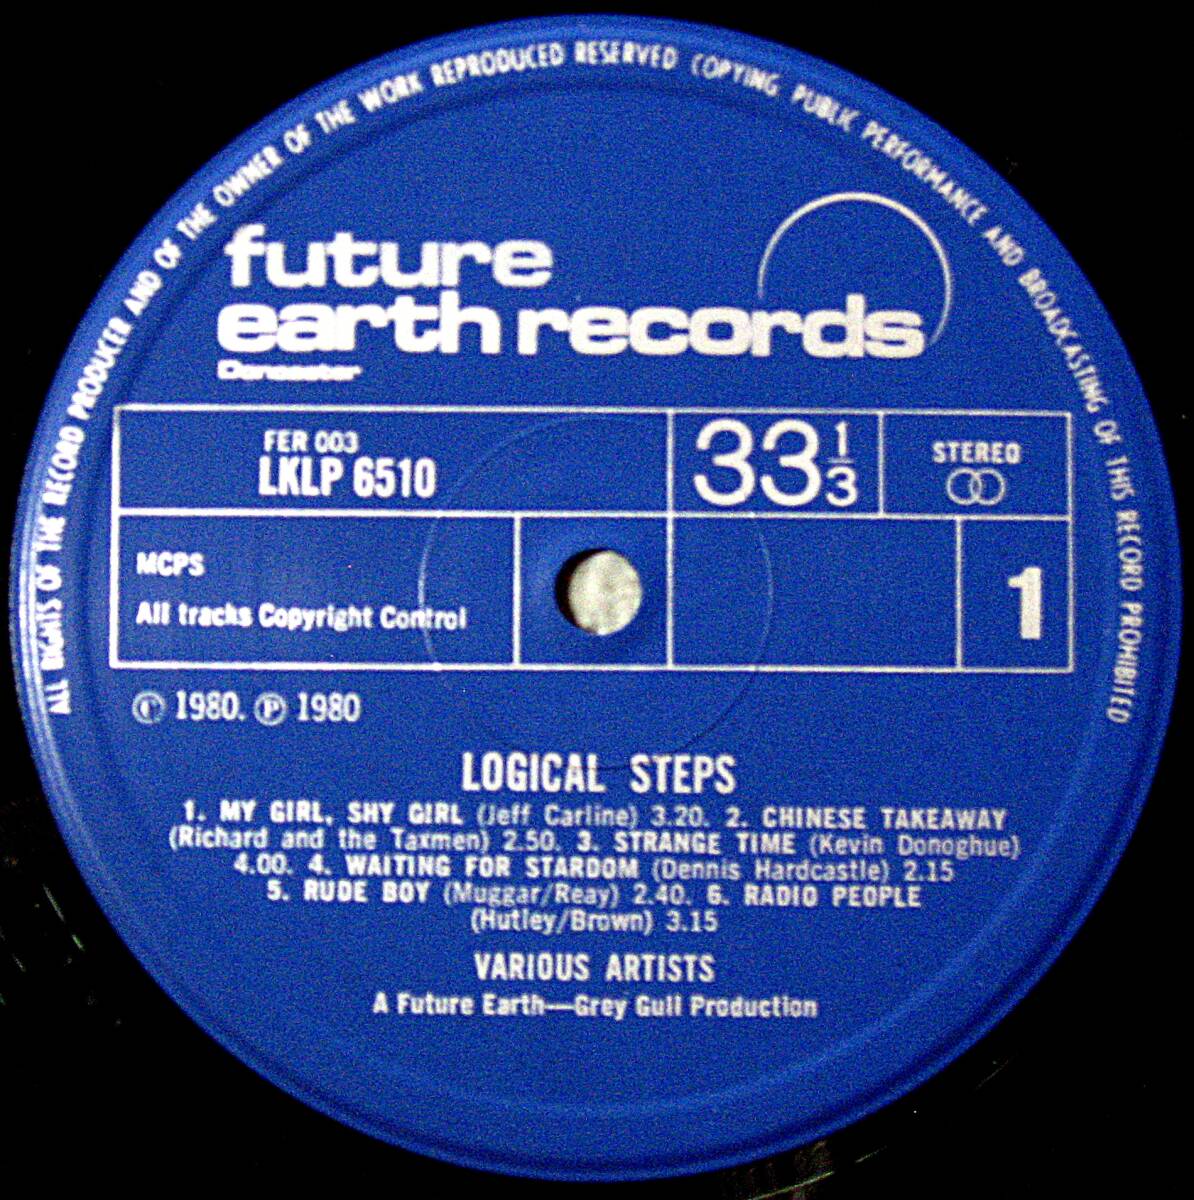 UK盤 1980s LK/LP6510 Future Earth records  V.A Logical Steps LP Uncool Danceband power pop punk の画像2